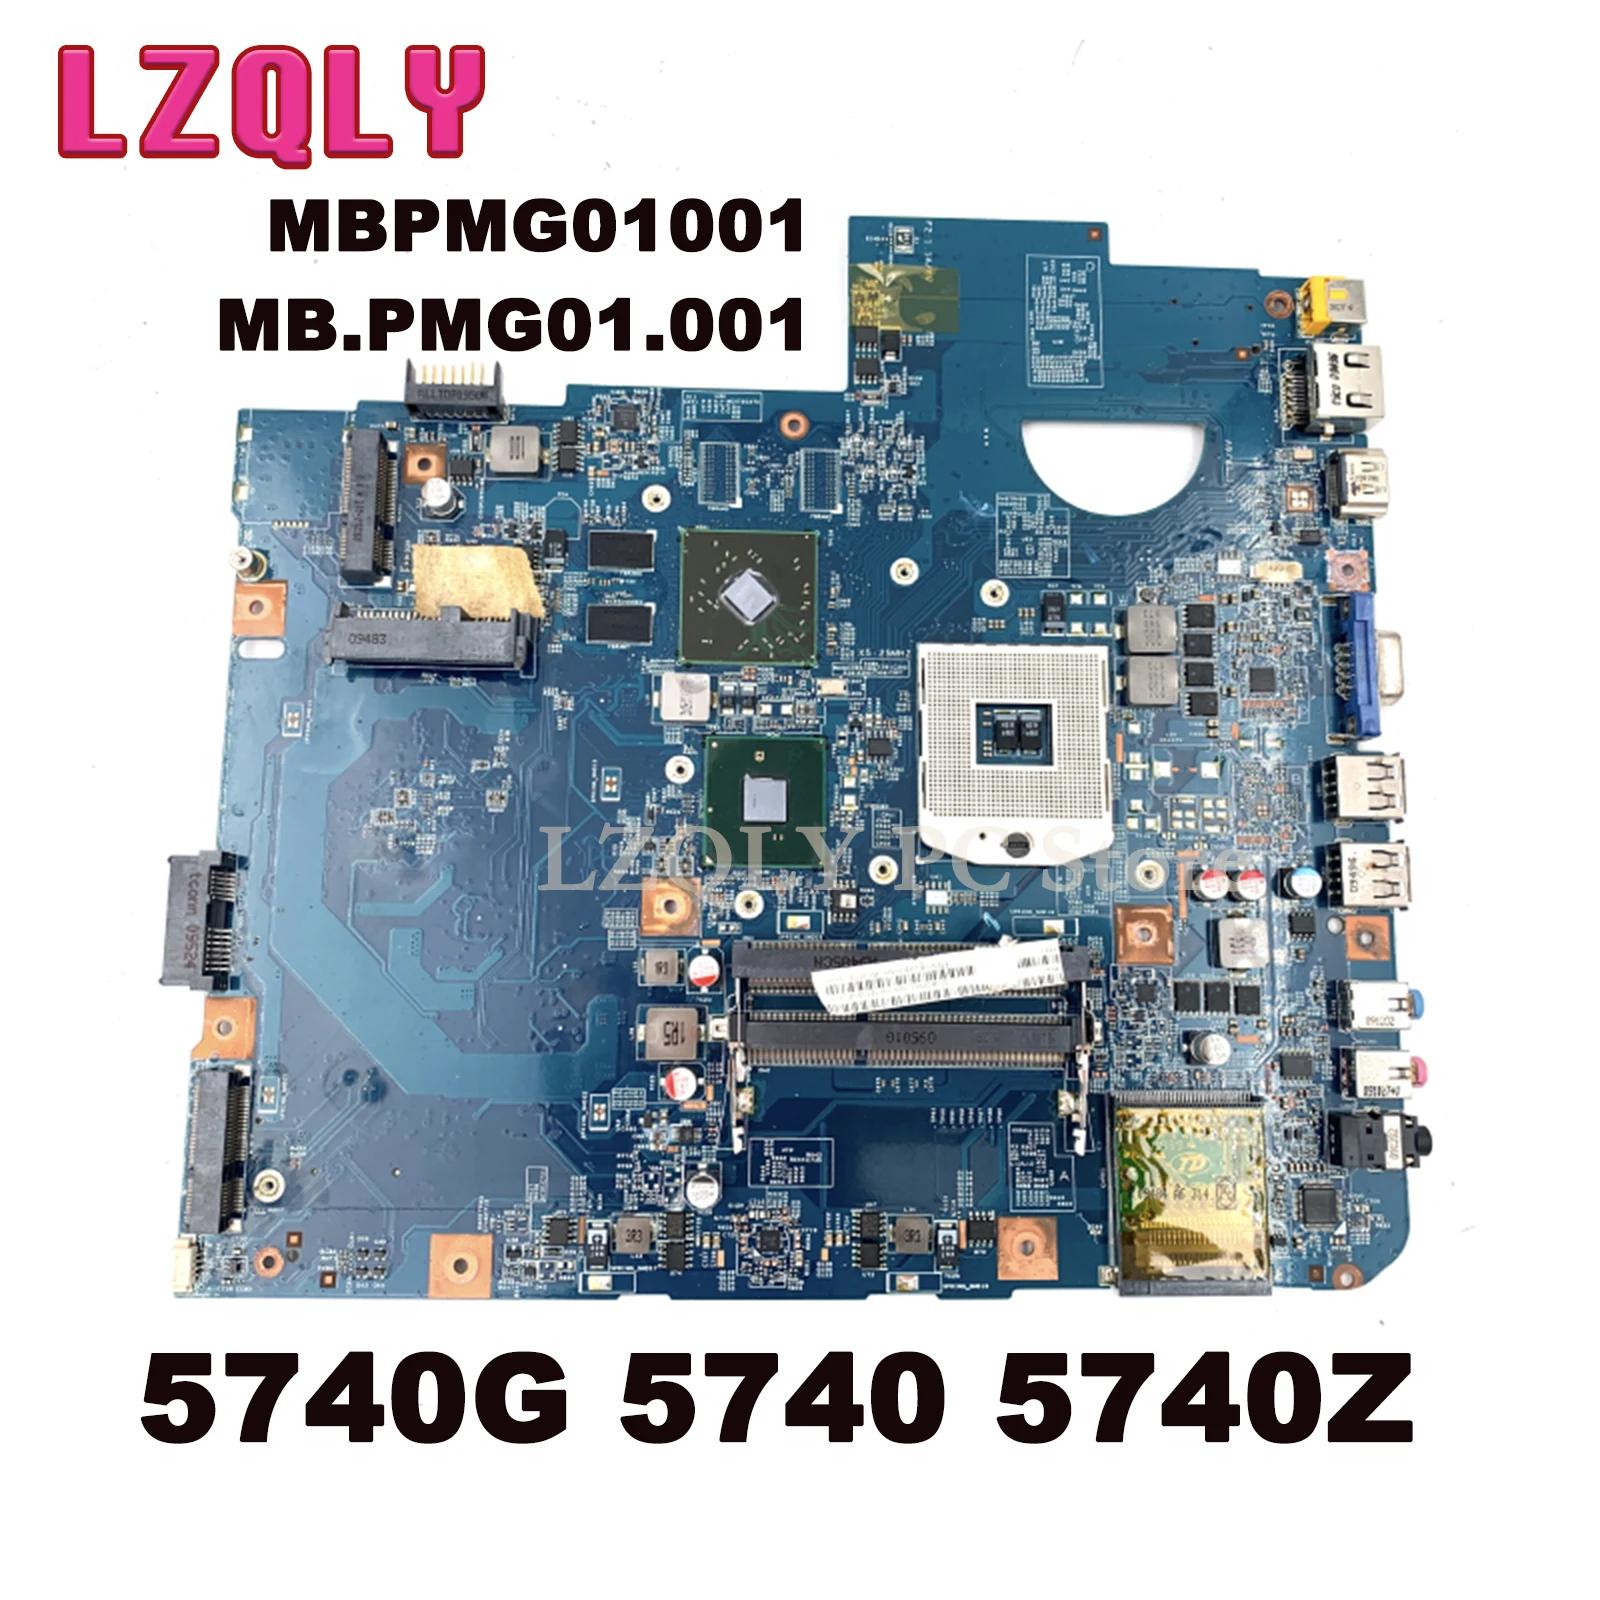 LZLQY For Acer aspire 5740G 5740 5740Z Laptop motherboard 48.4GD01.01M MBPMG01001 MB.PMG01.001 HM55 DDR3 512MB GPU free cpu